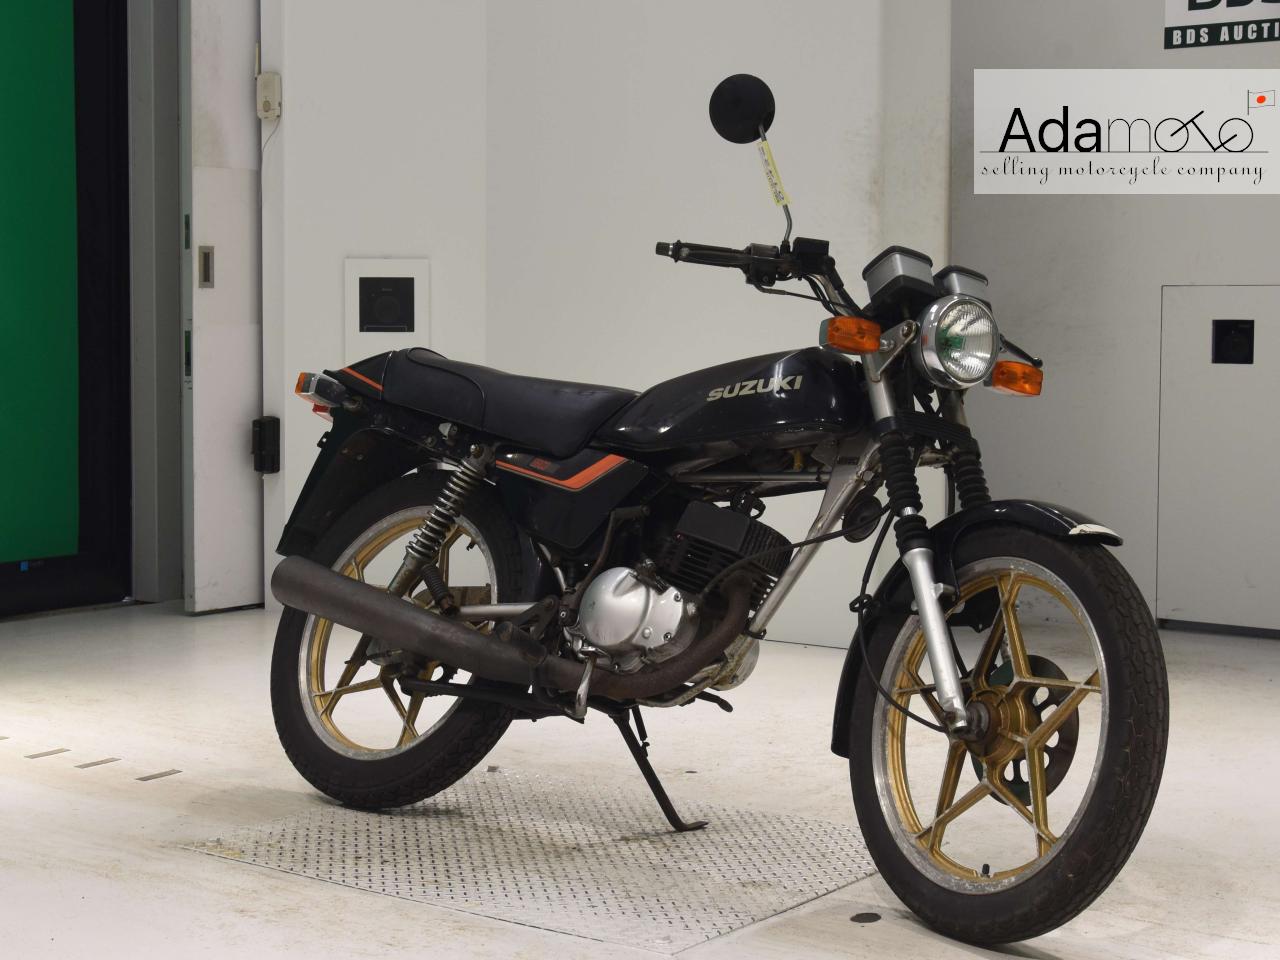 Suzuki RG80E - Adamoto - Motorcycles from Japan